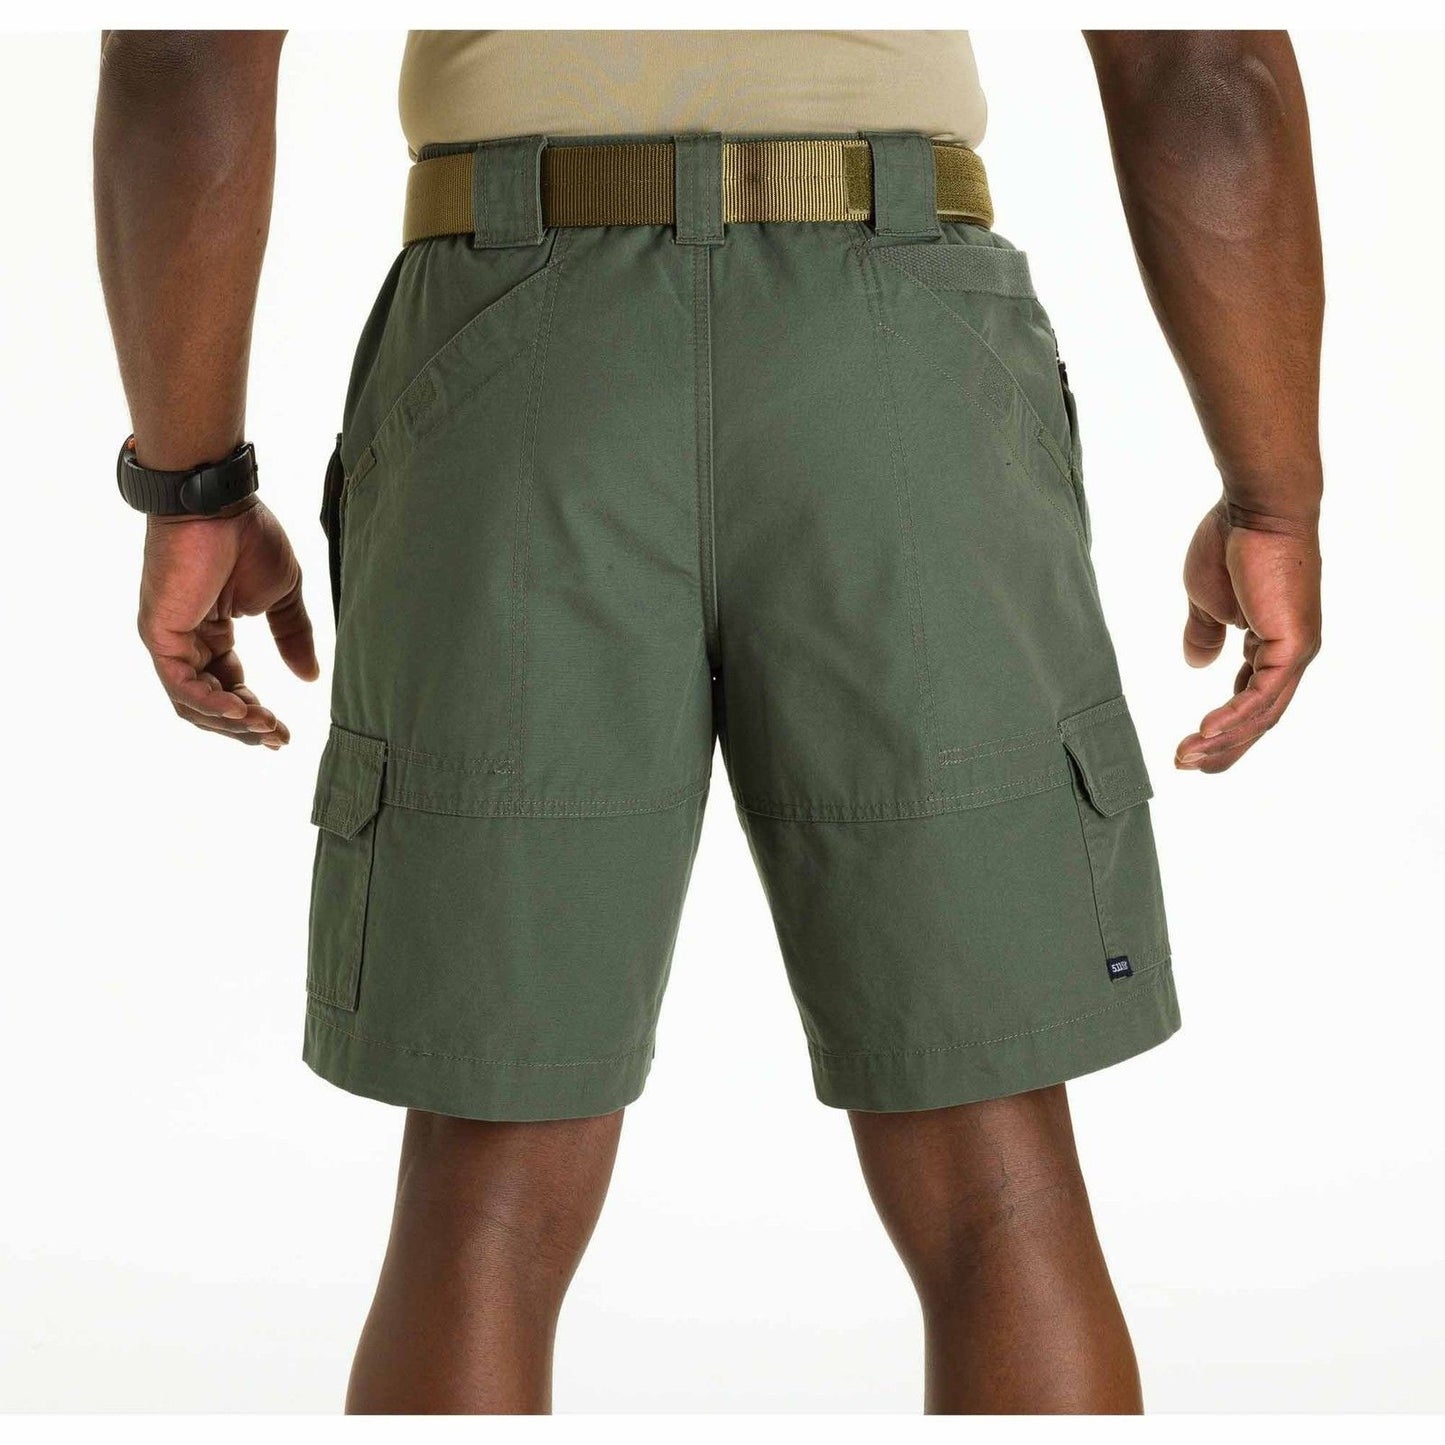 5.11 Tactical Cargo Shorts - Casual & Professional Mens Field Duty Short